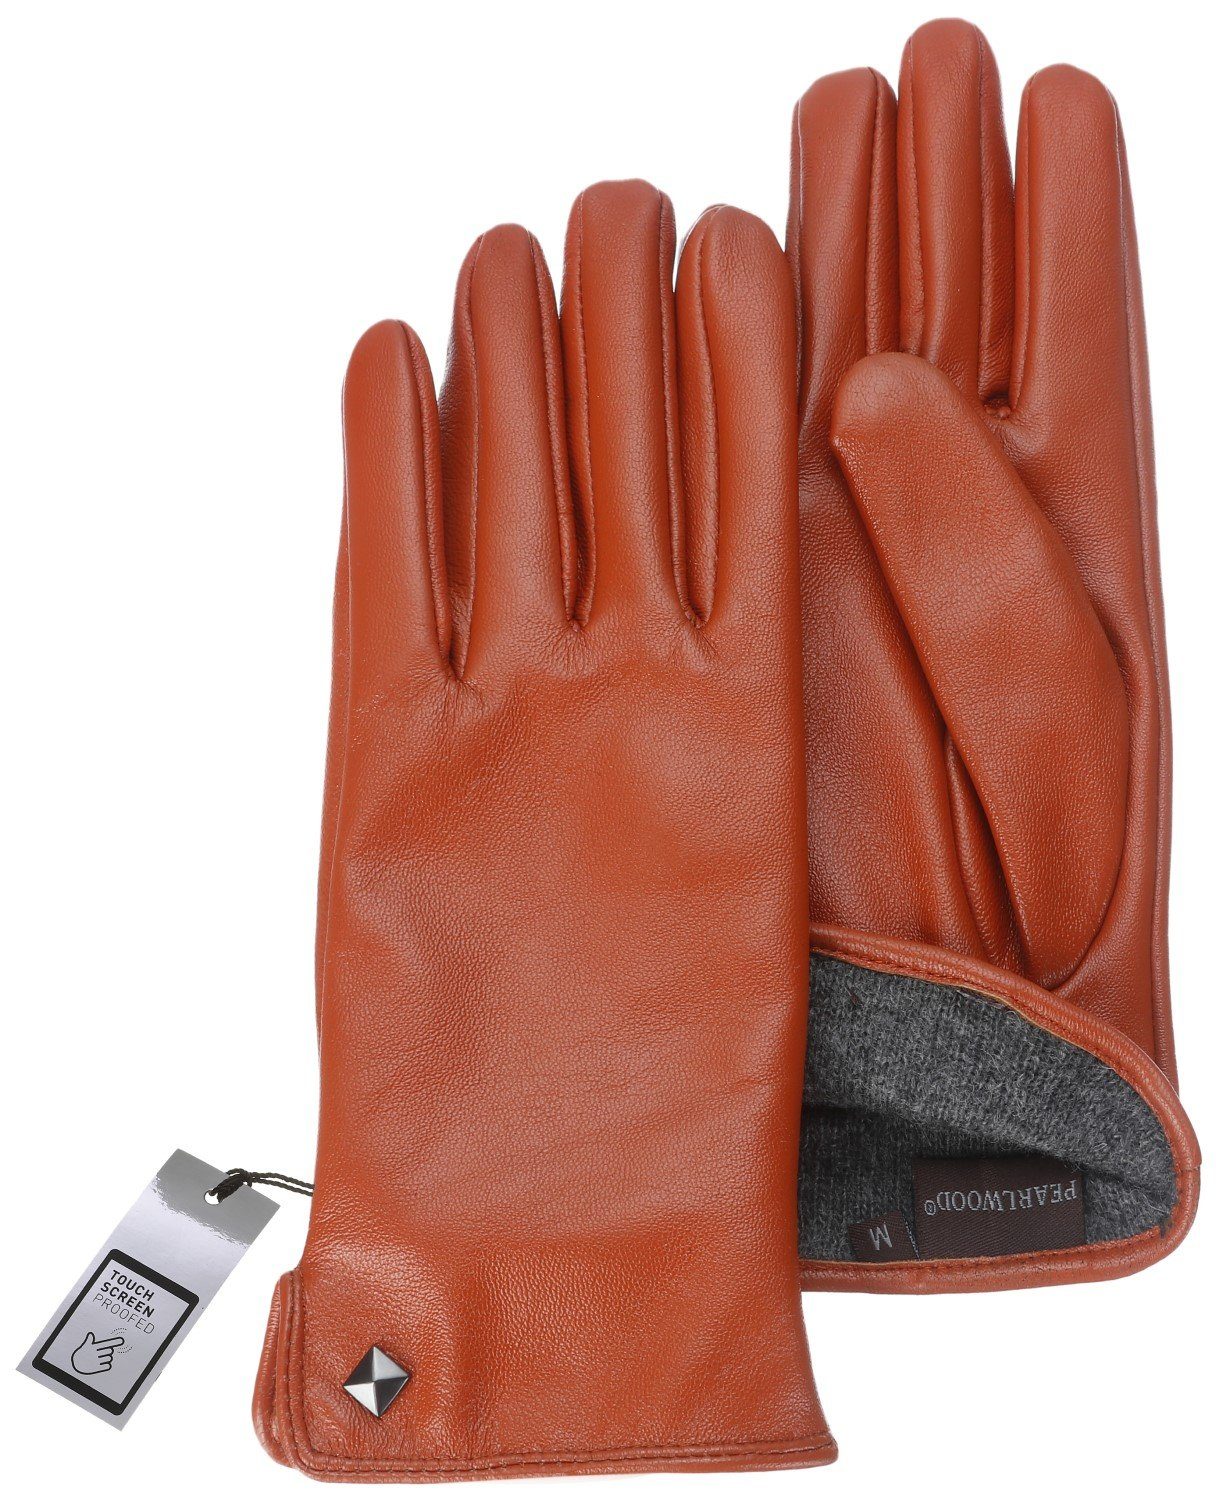 PEARLWOOD Lederhandschuhe Touchscreen-Handschuhe orange 540 Woll-Mix-Futter Meg